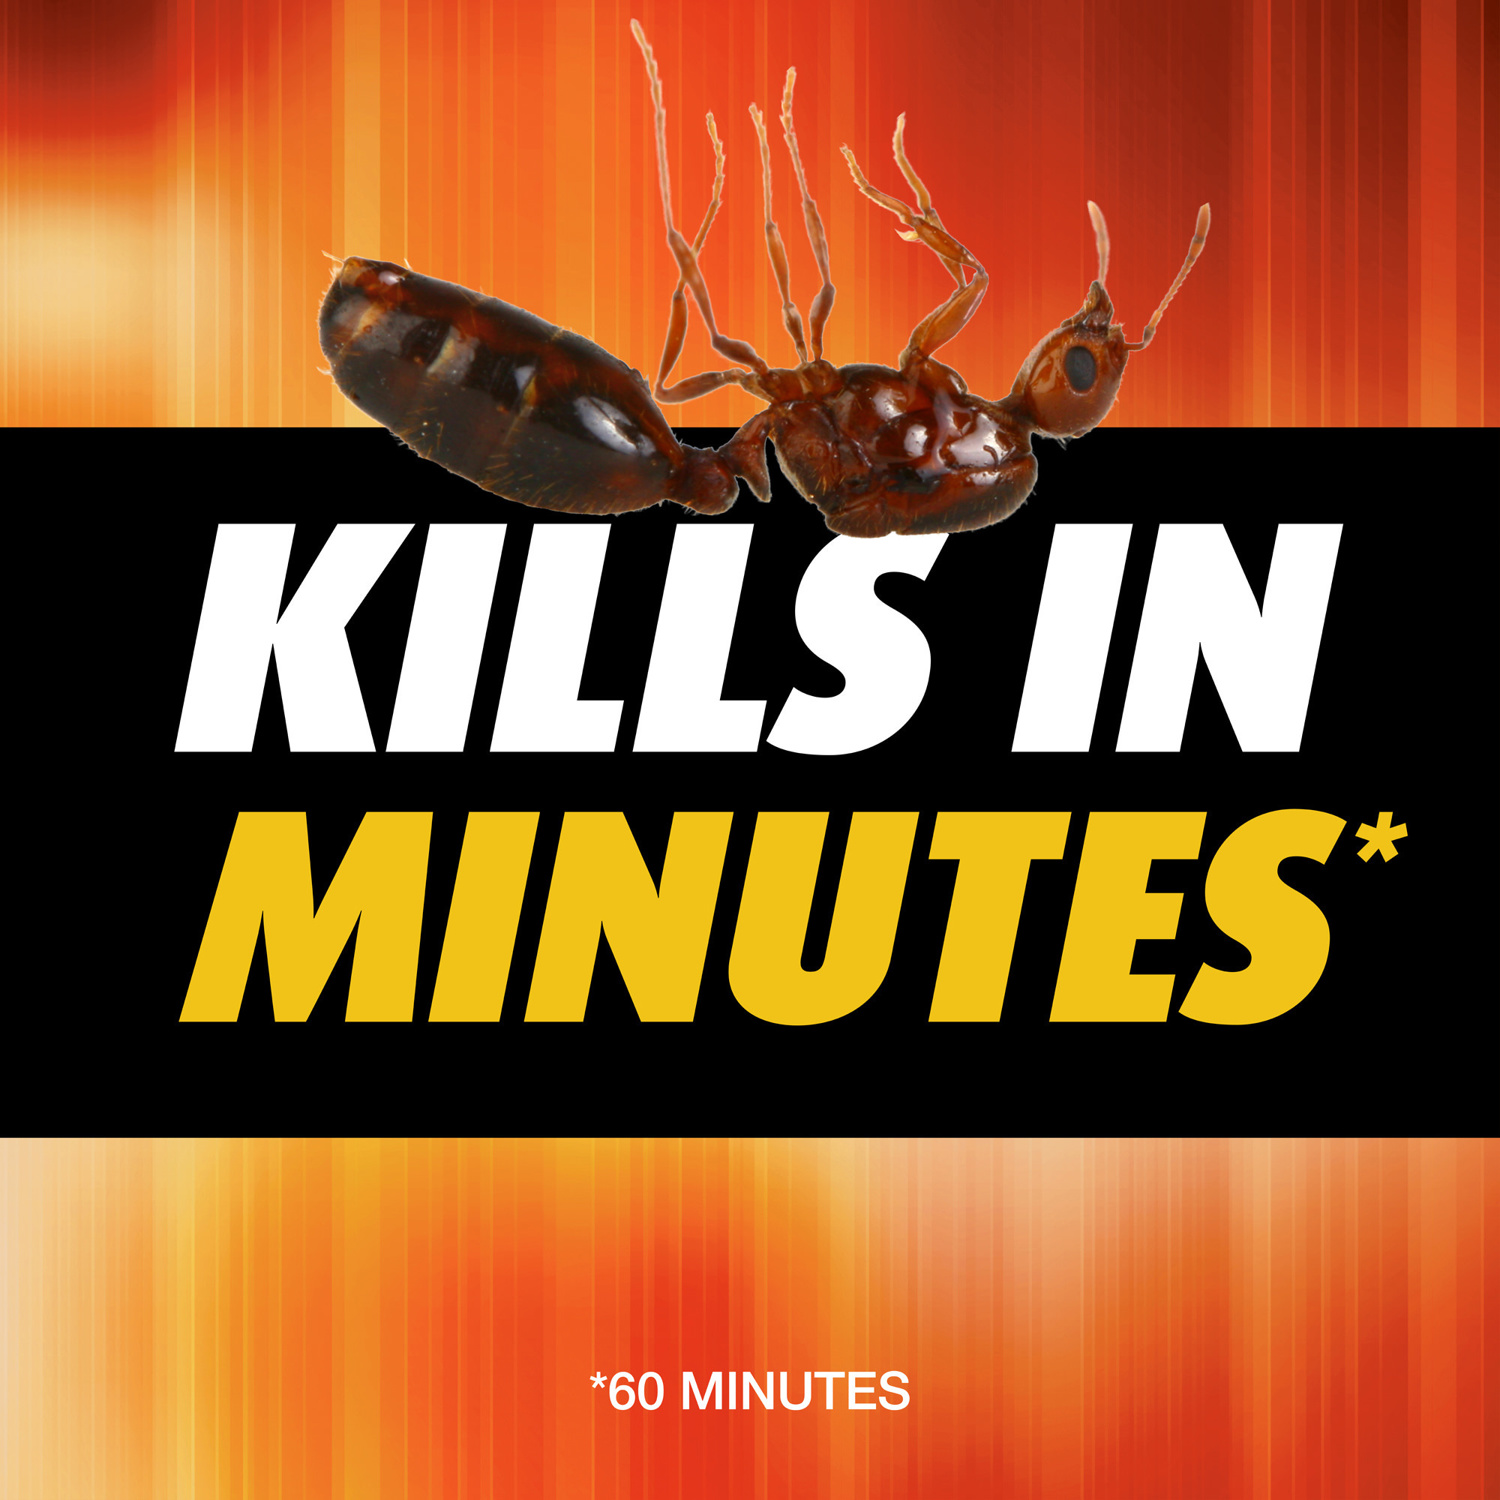 Ortho Orthene Fire Ant Killer Powder 12 oz